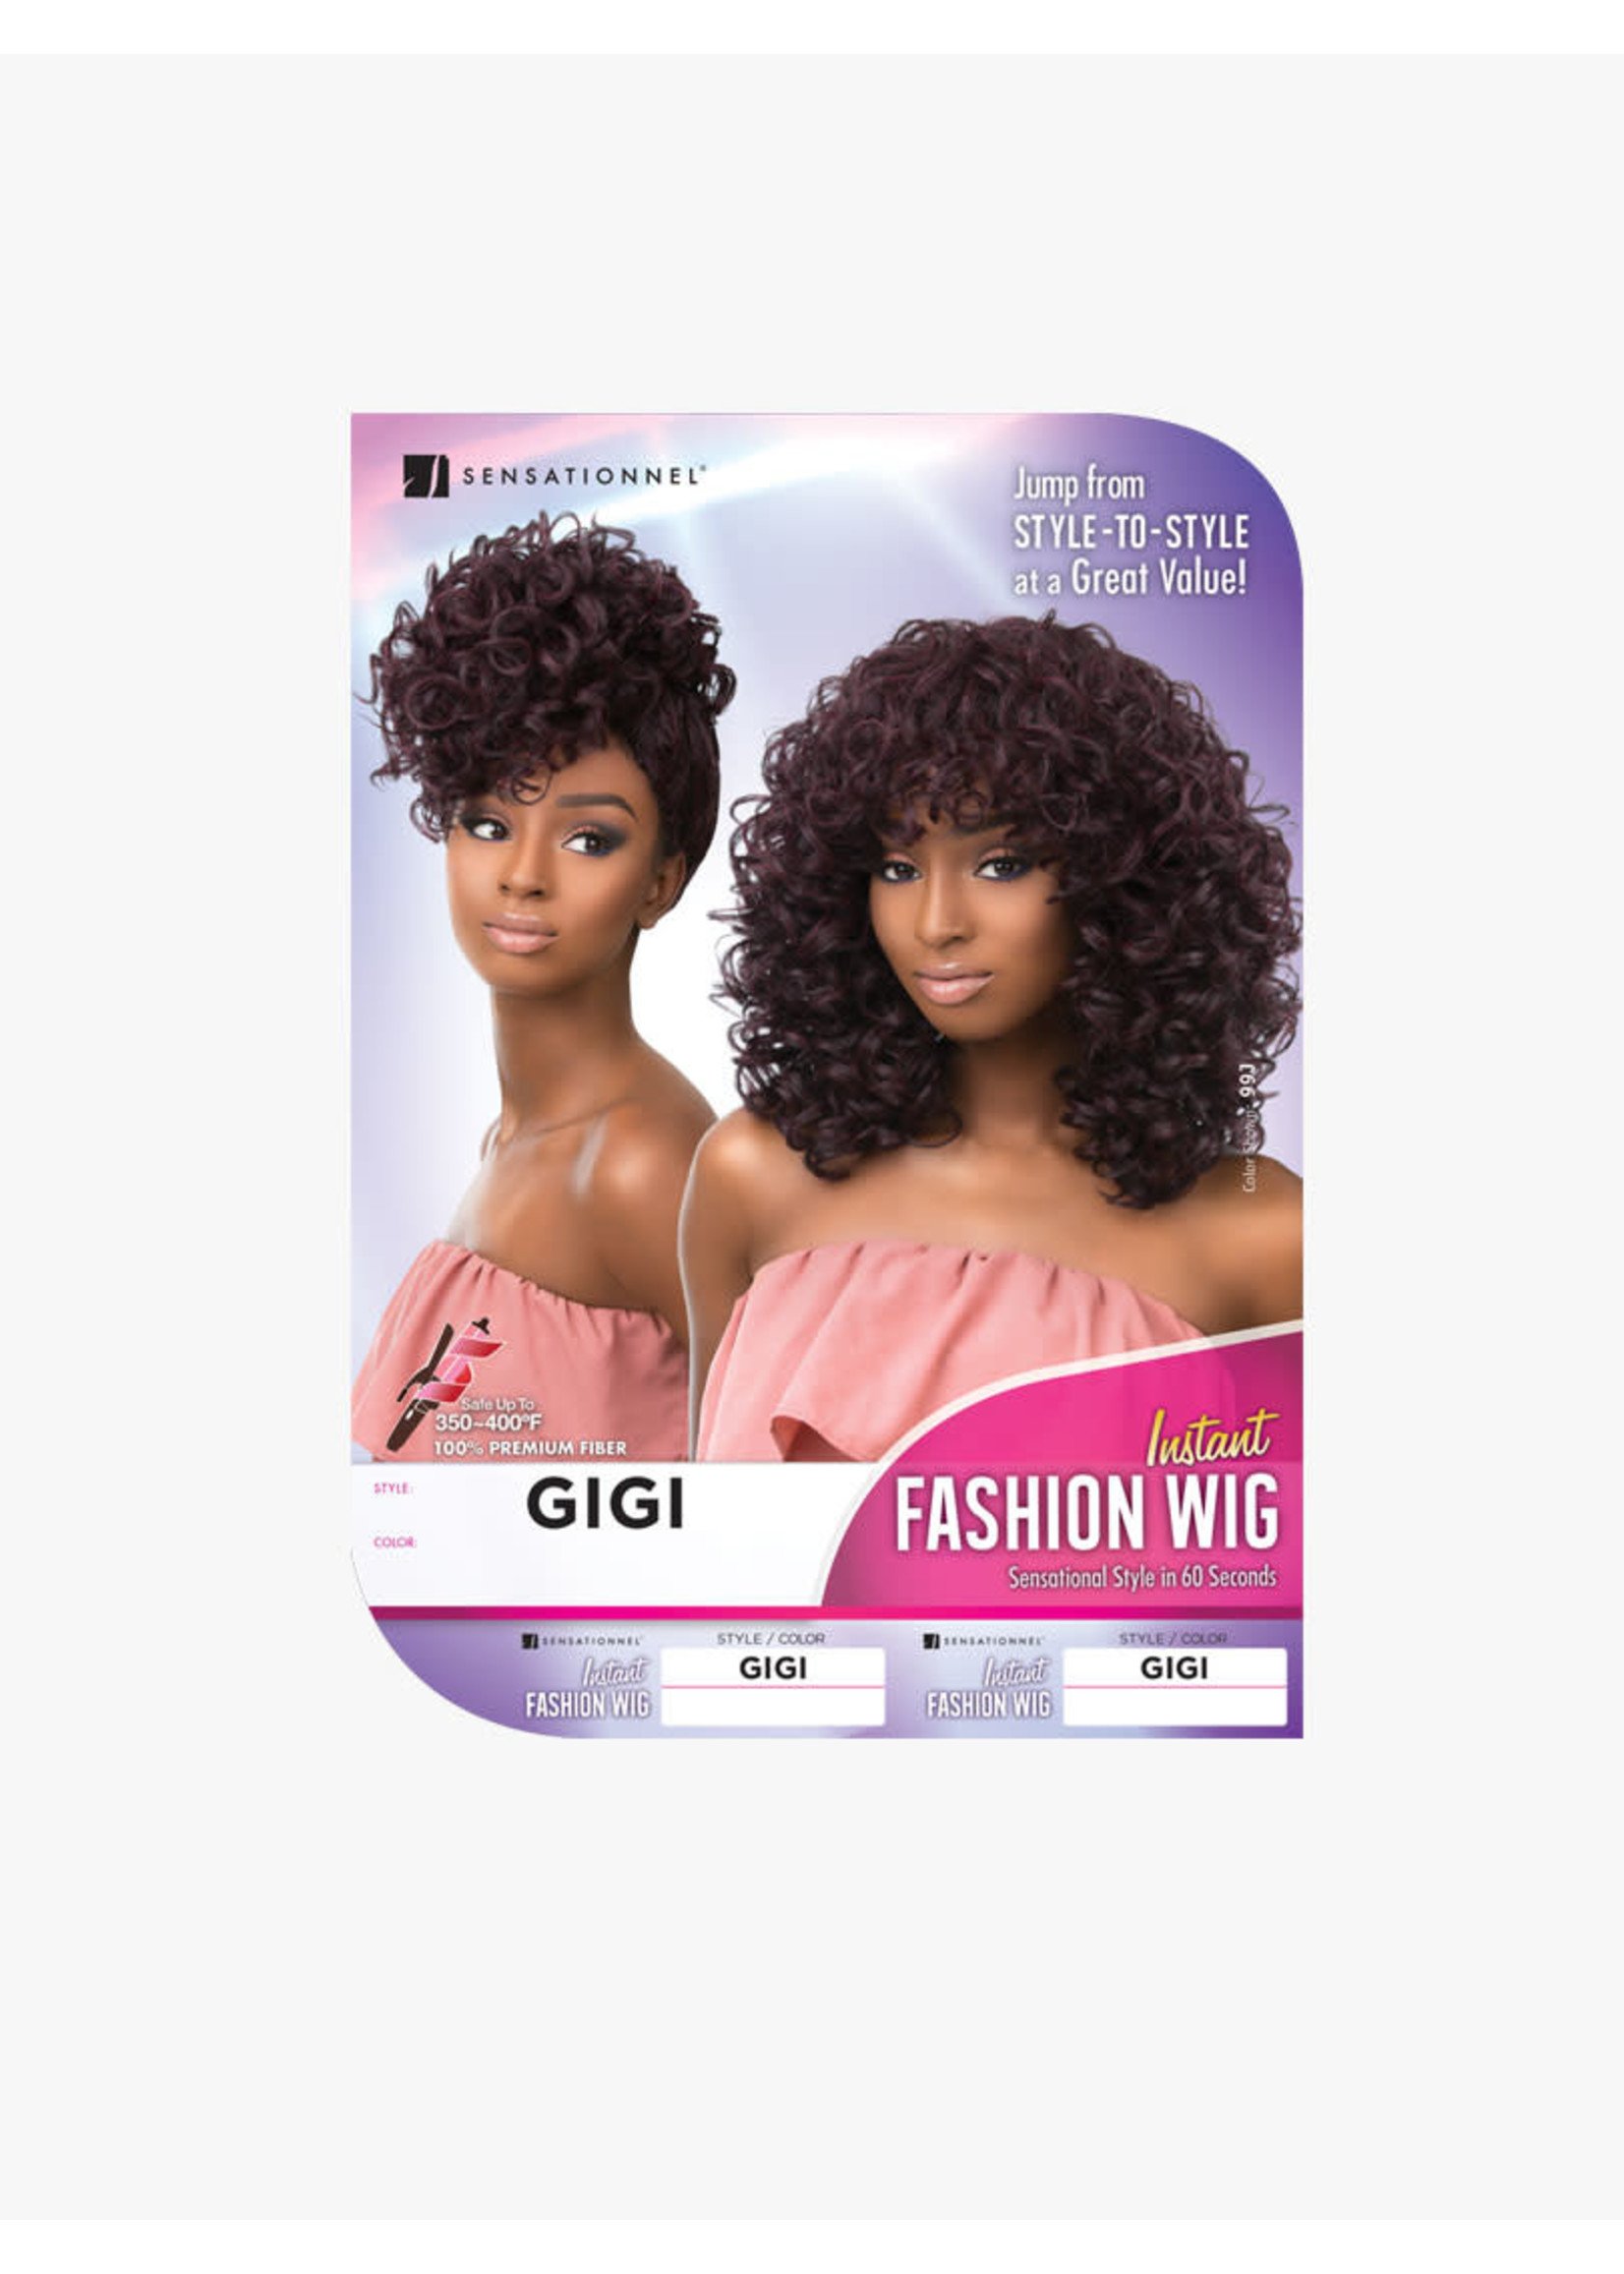 Sensationnel Instant Fashion Wig GiGi